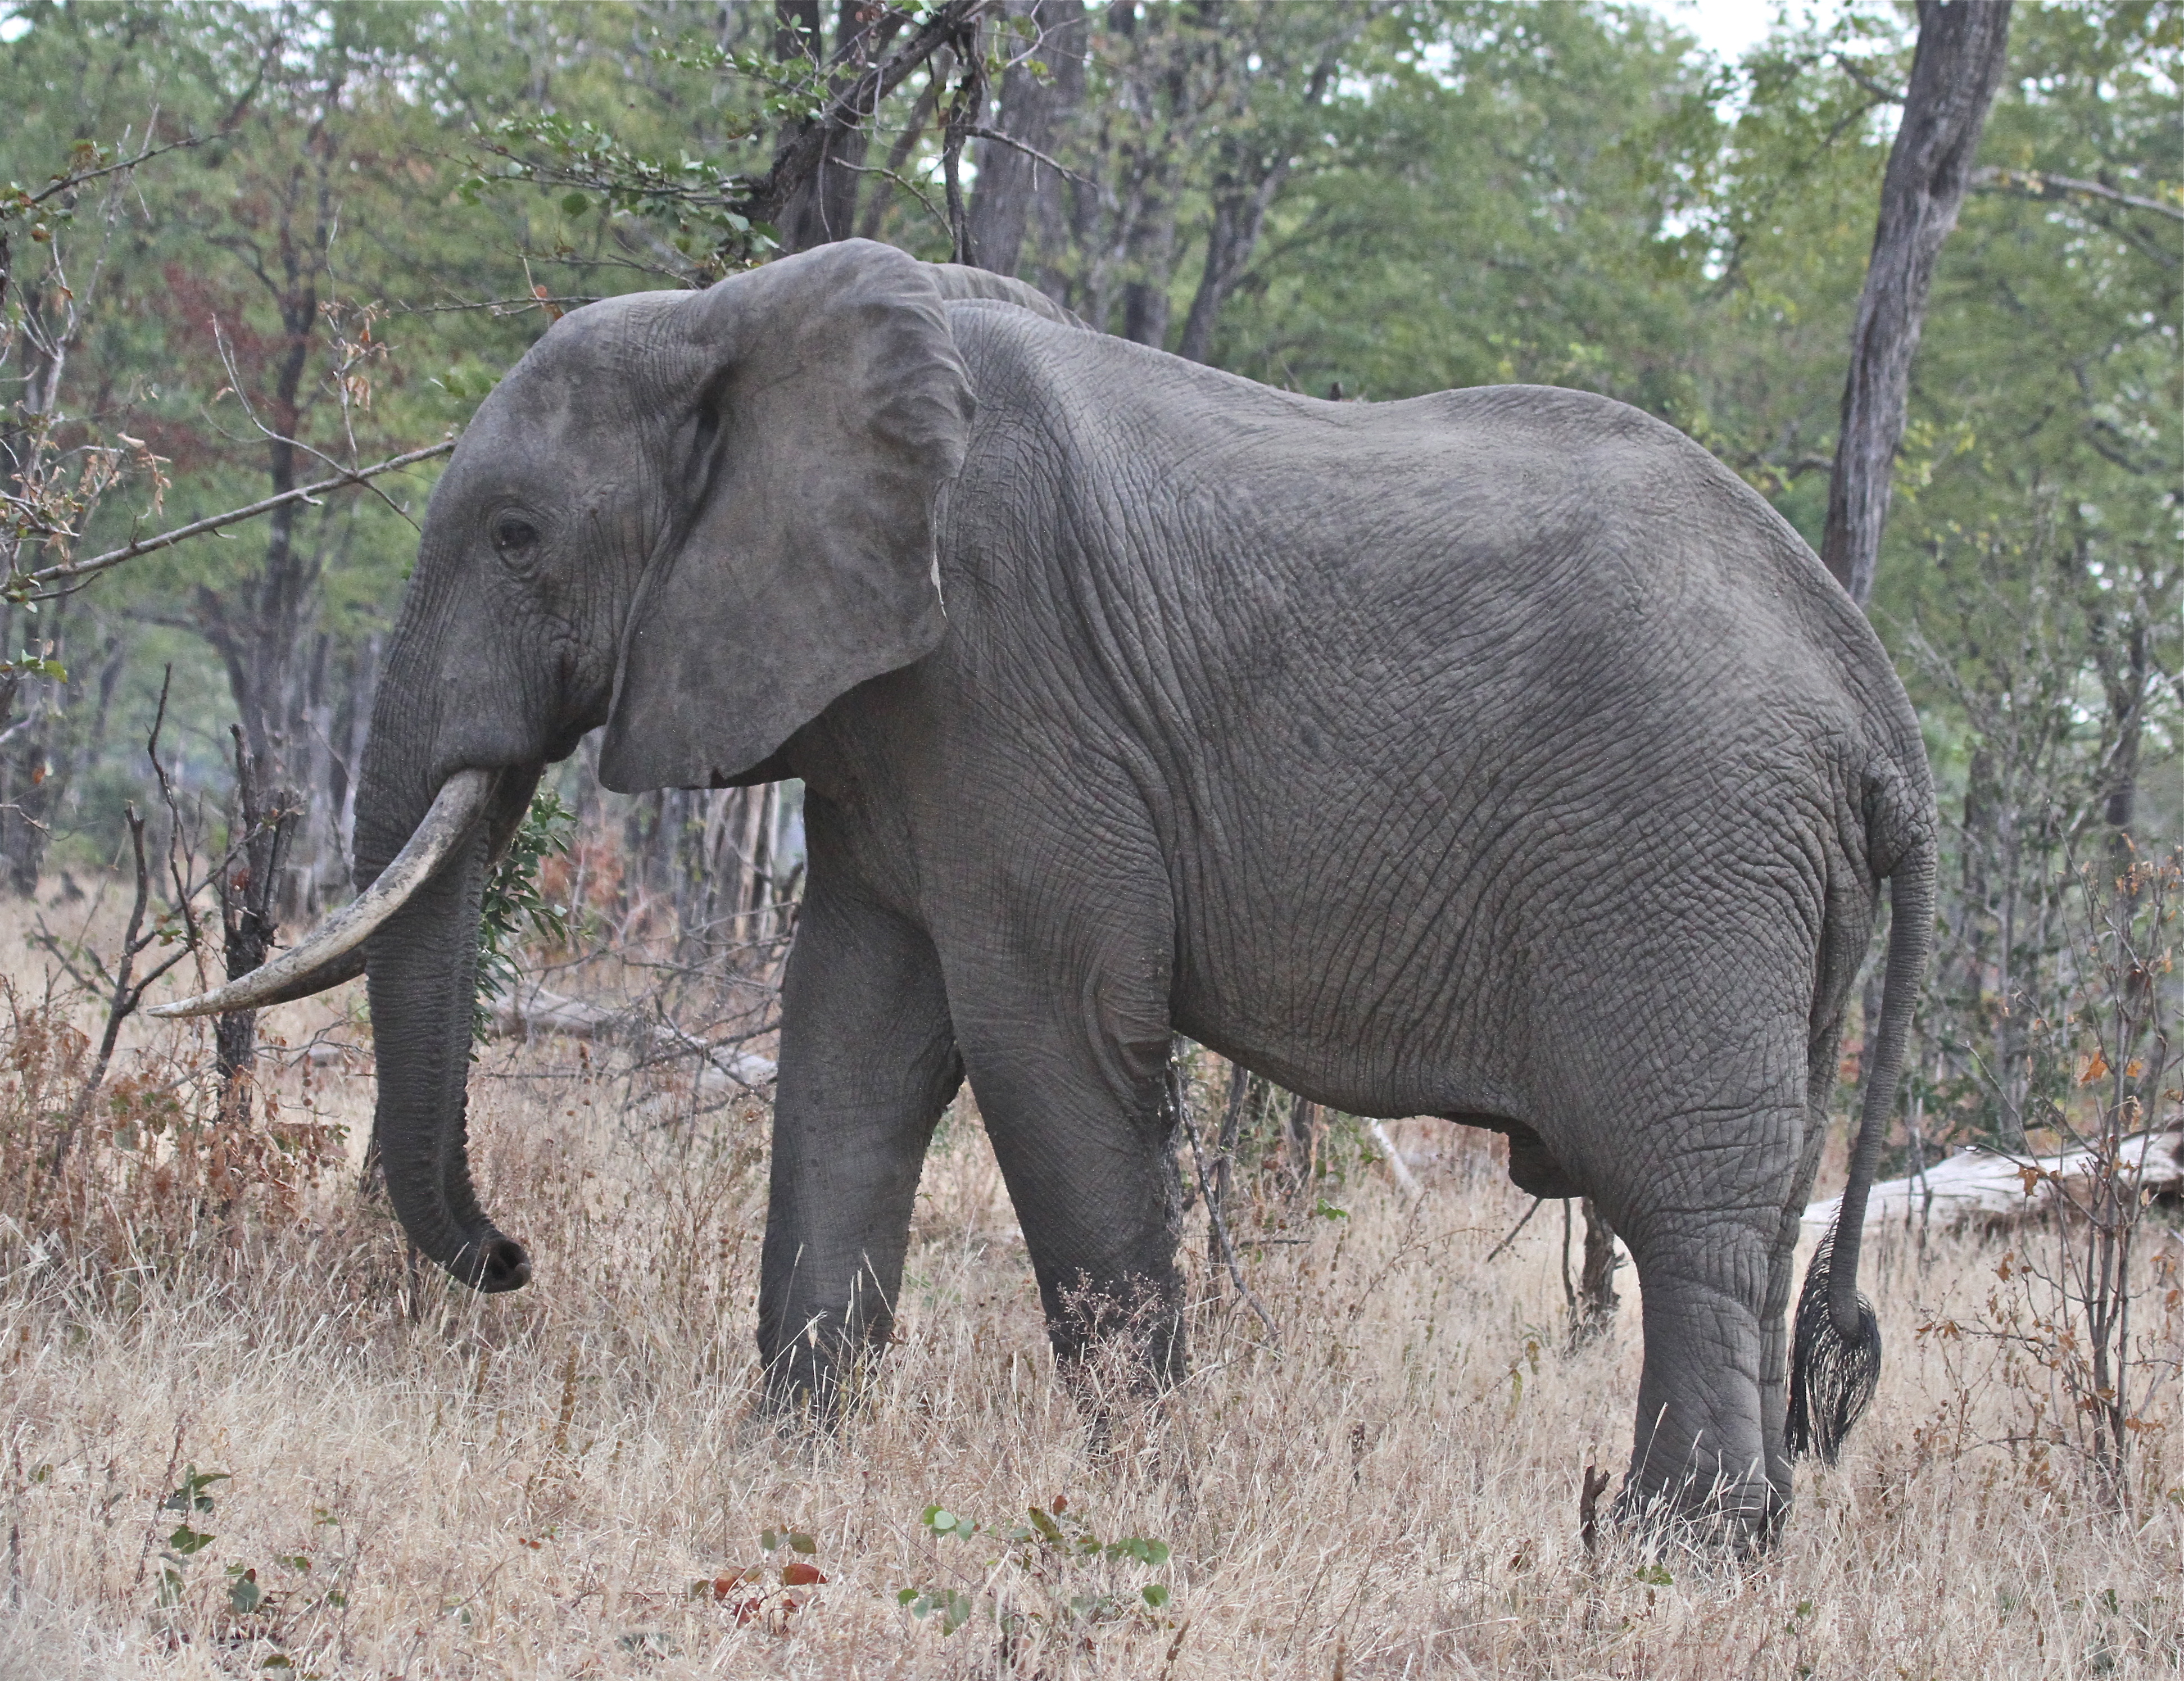 A heavy-footed elephant